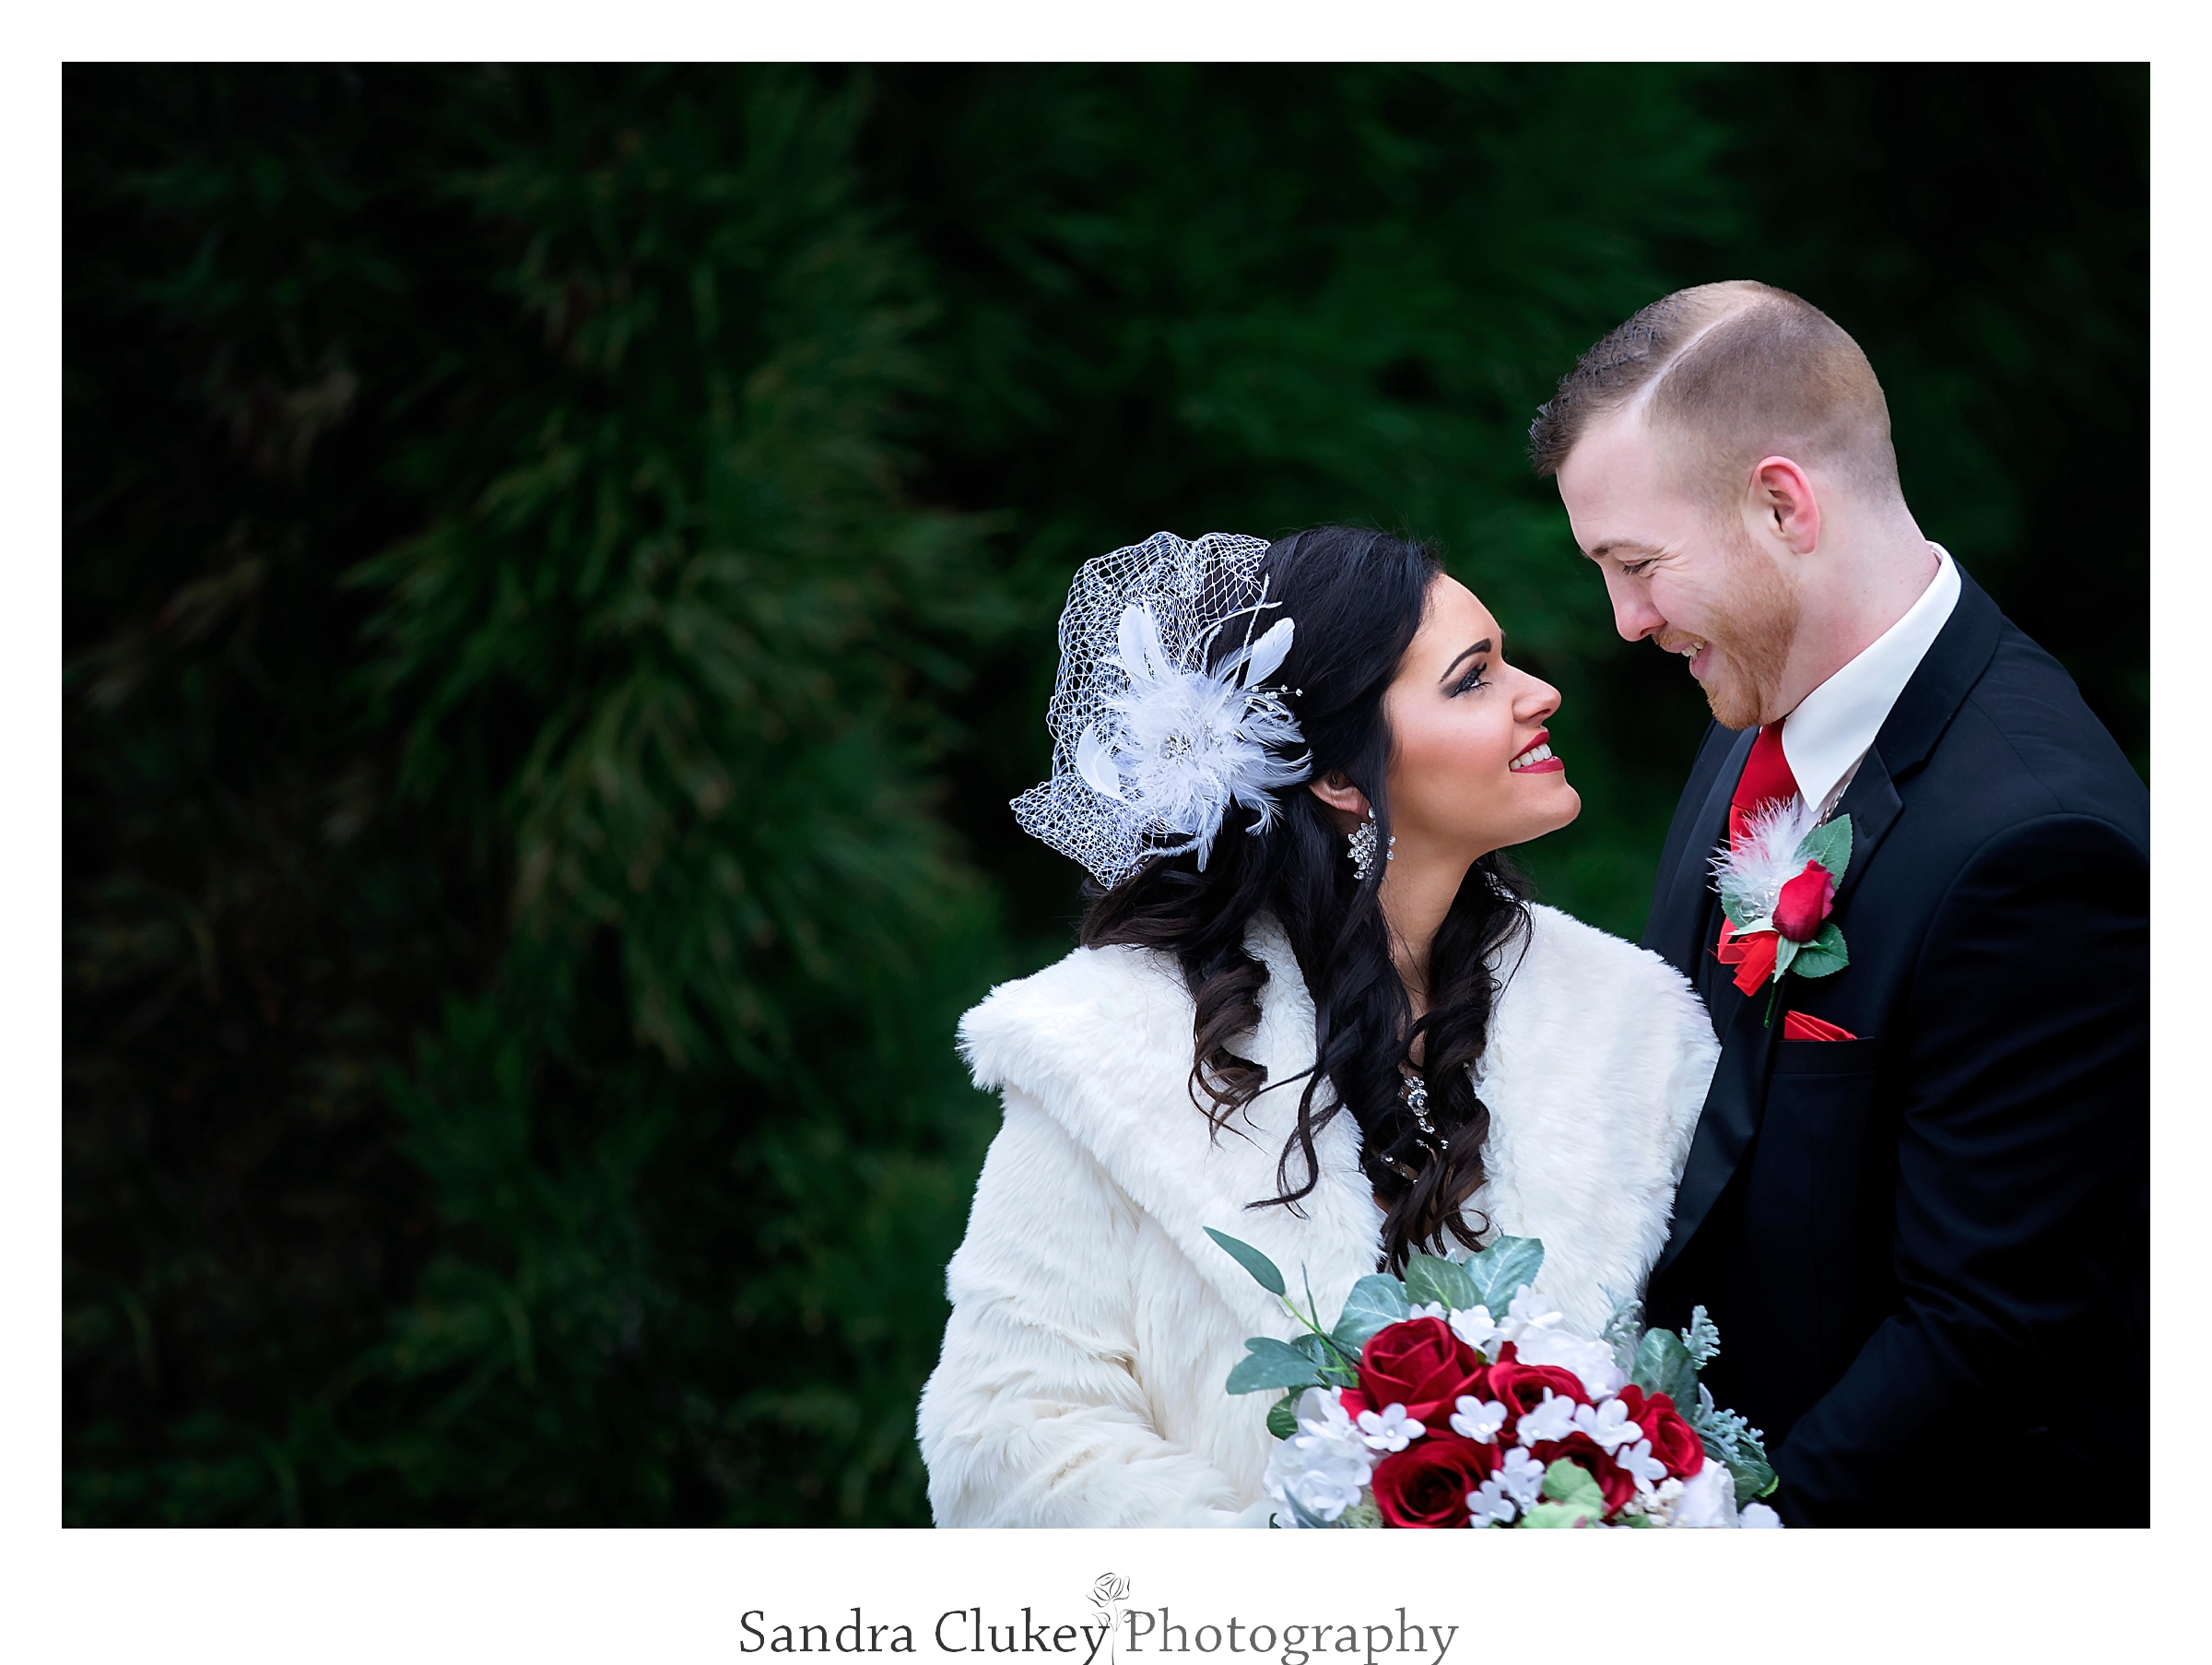 Loving Gaze between bride and groom at Lee University Chapel, Cleveland TN